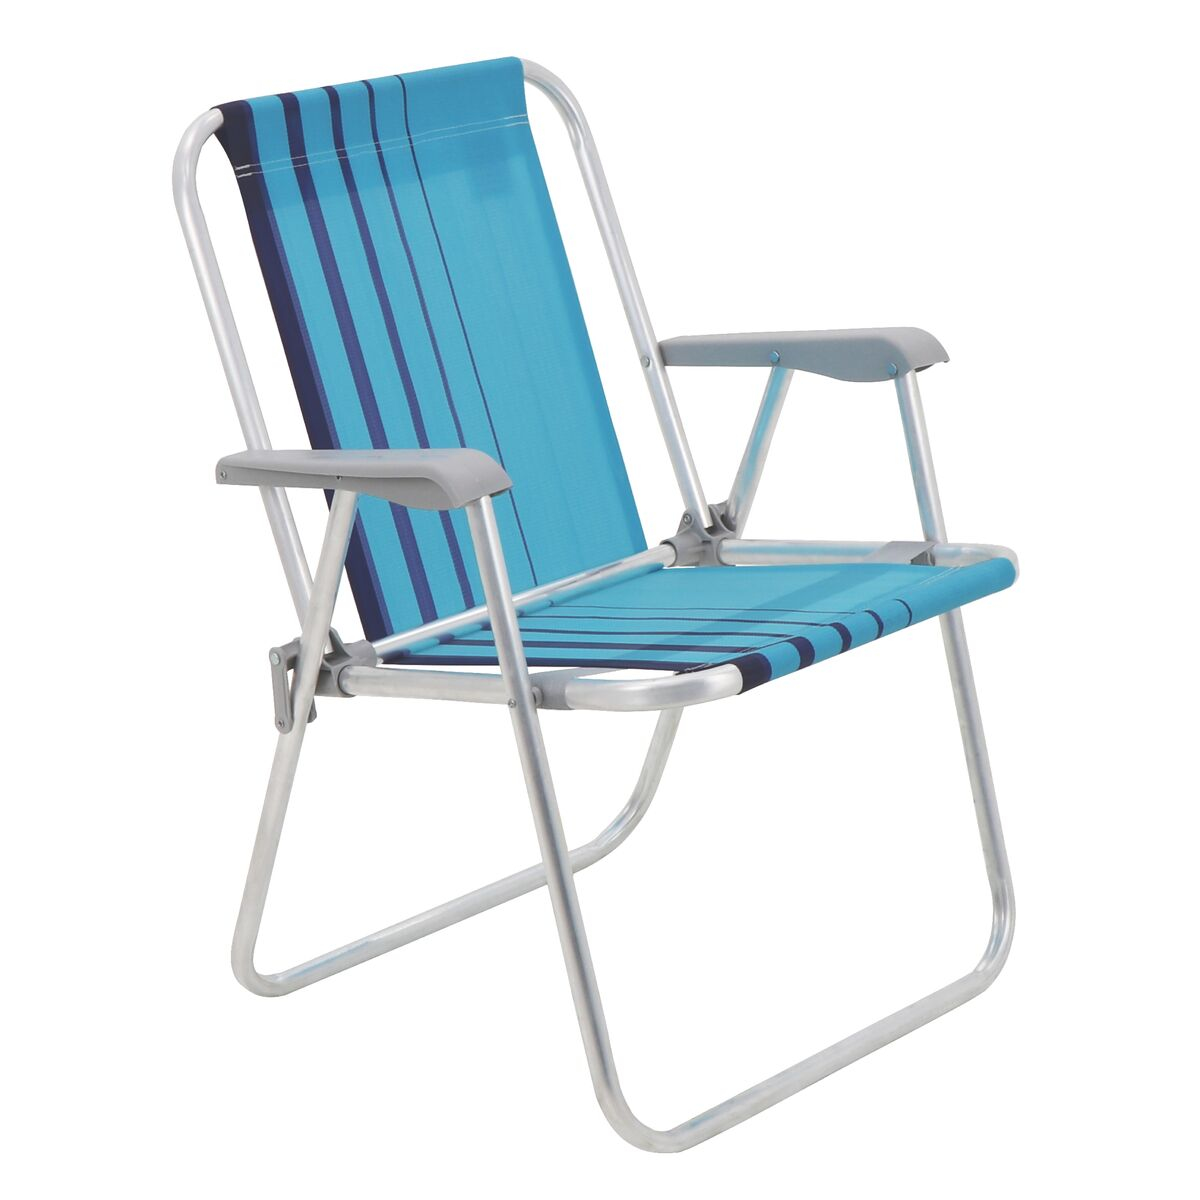 Tramontina Samoa High Aluminum Beach Chair with Blue Seat